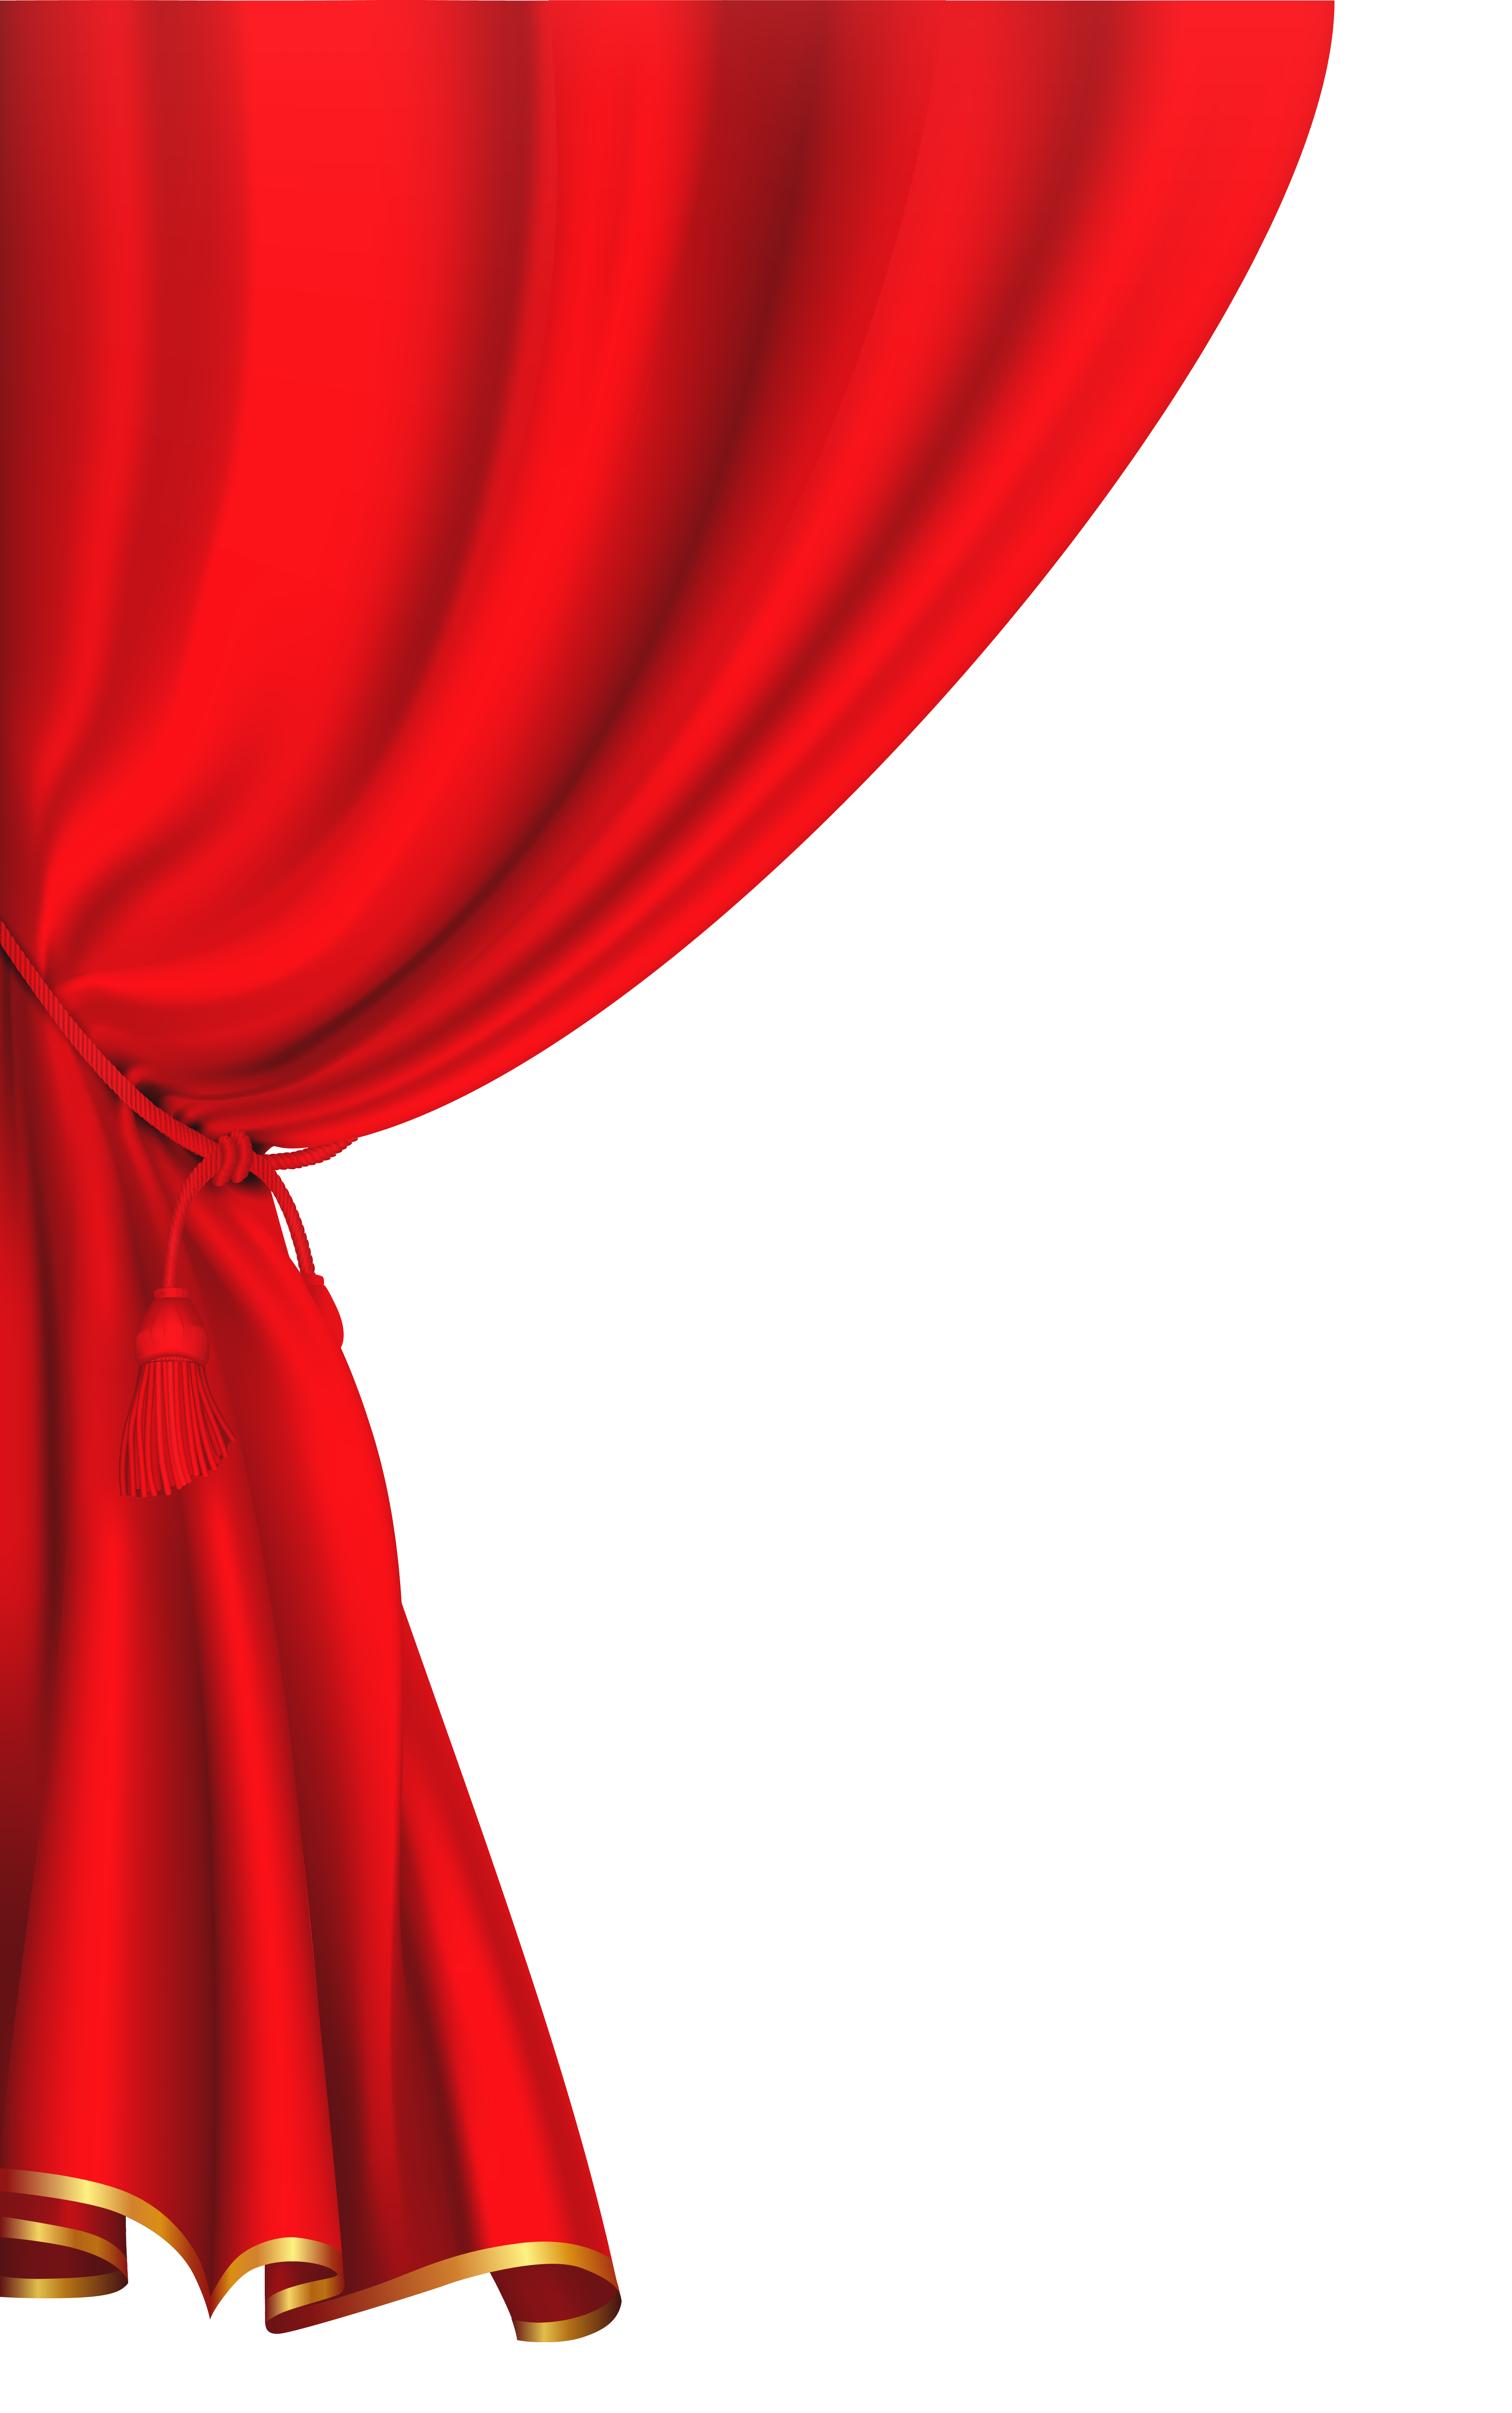 Handprint clipart abc. Red curtain image buda